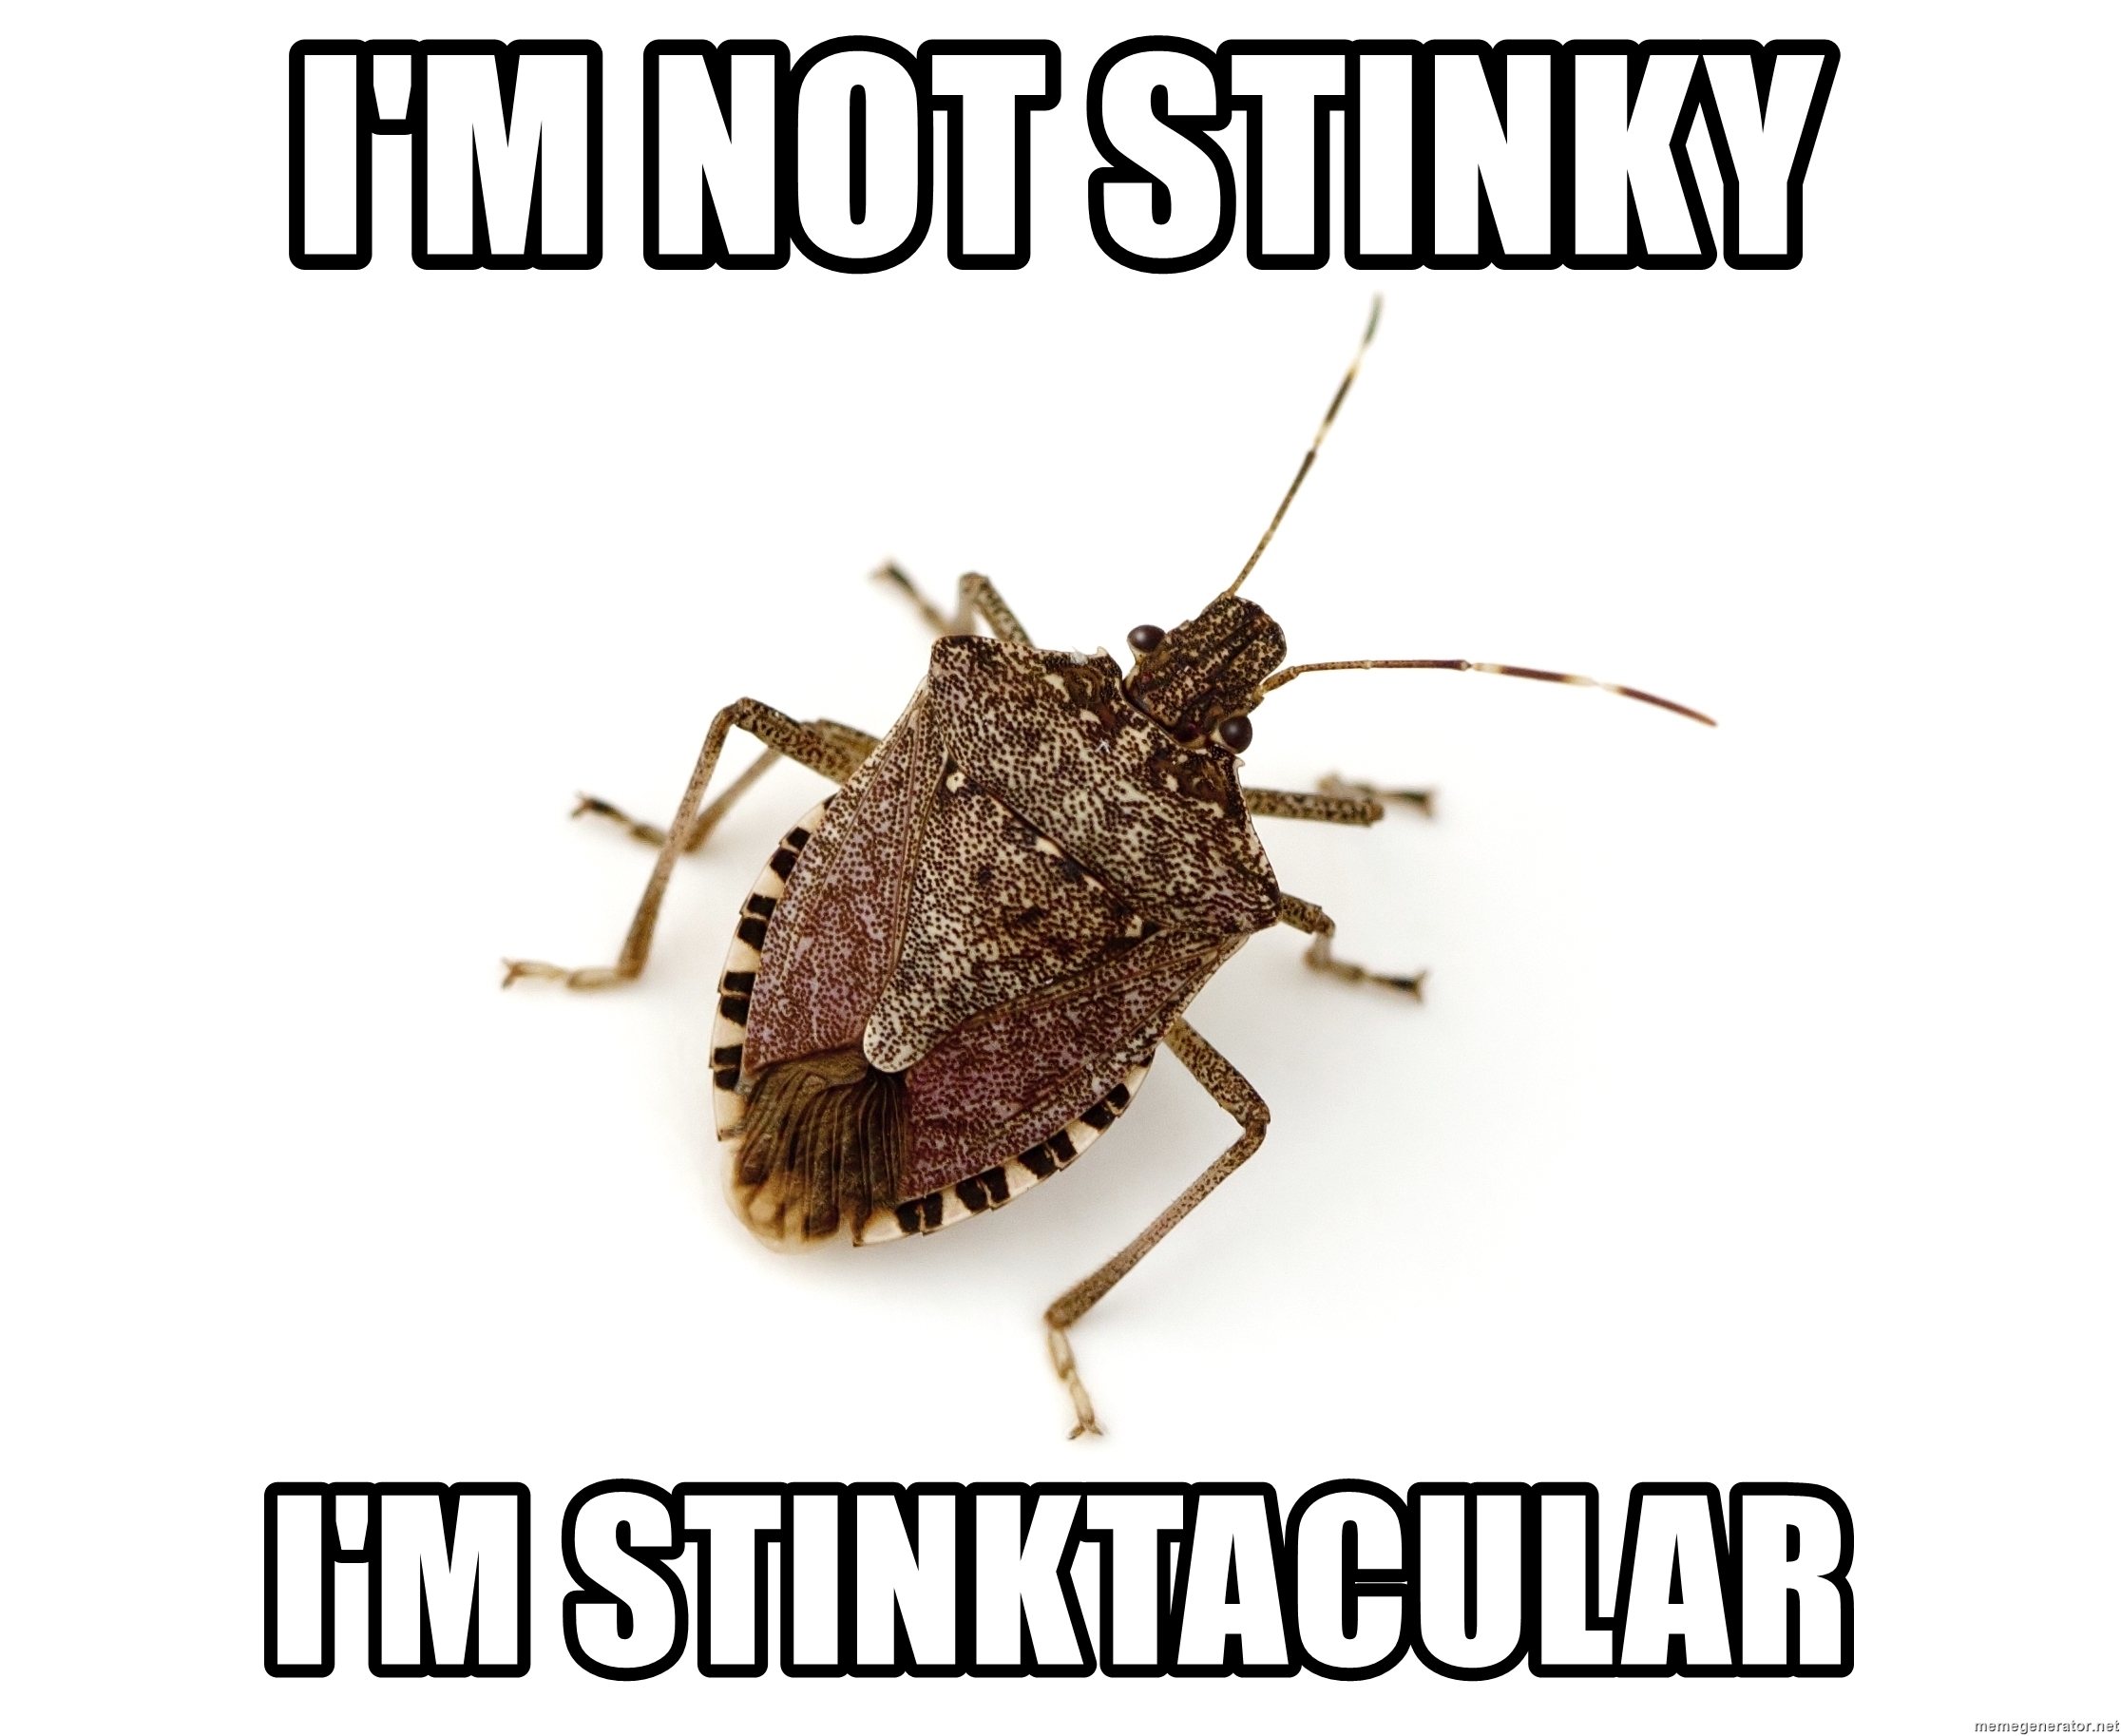 Stink Bug Funny Meme - I'm Stinktacular